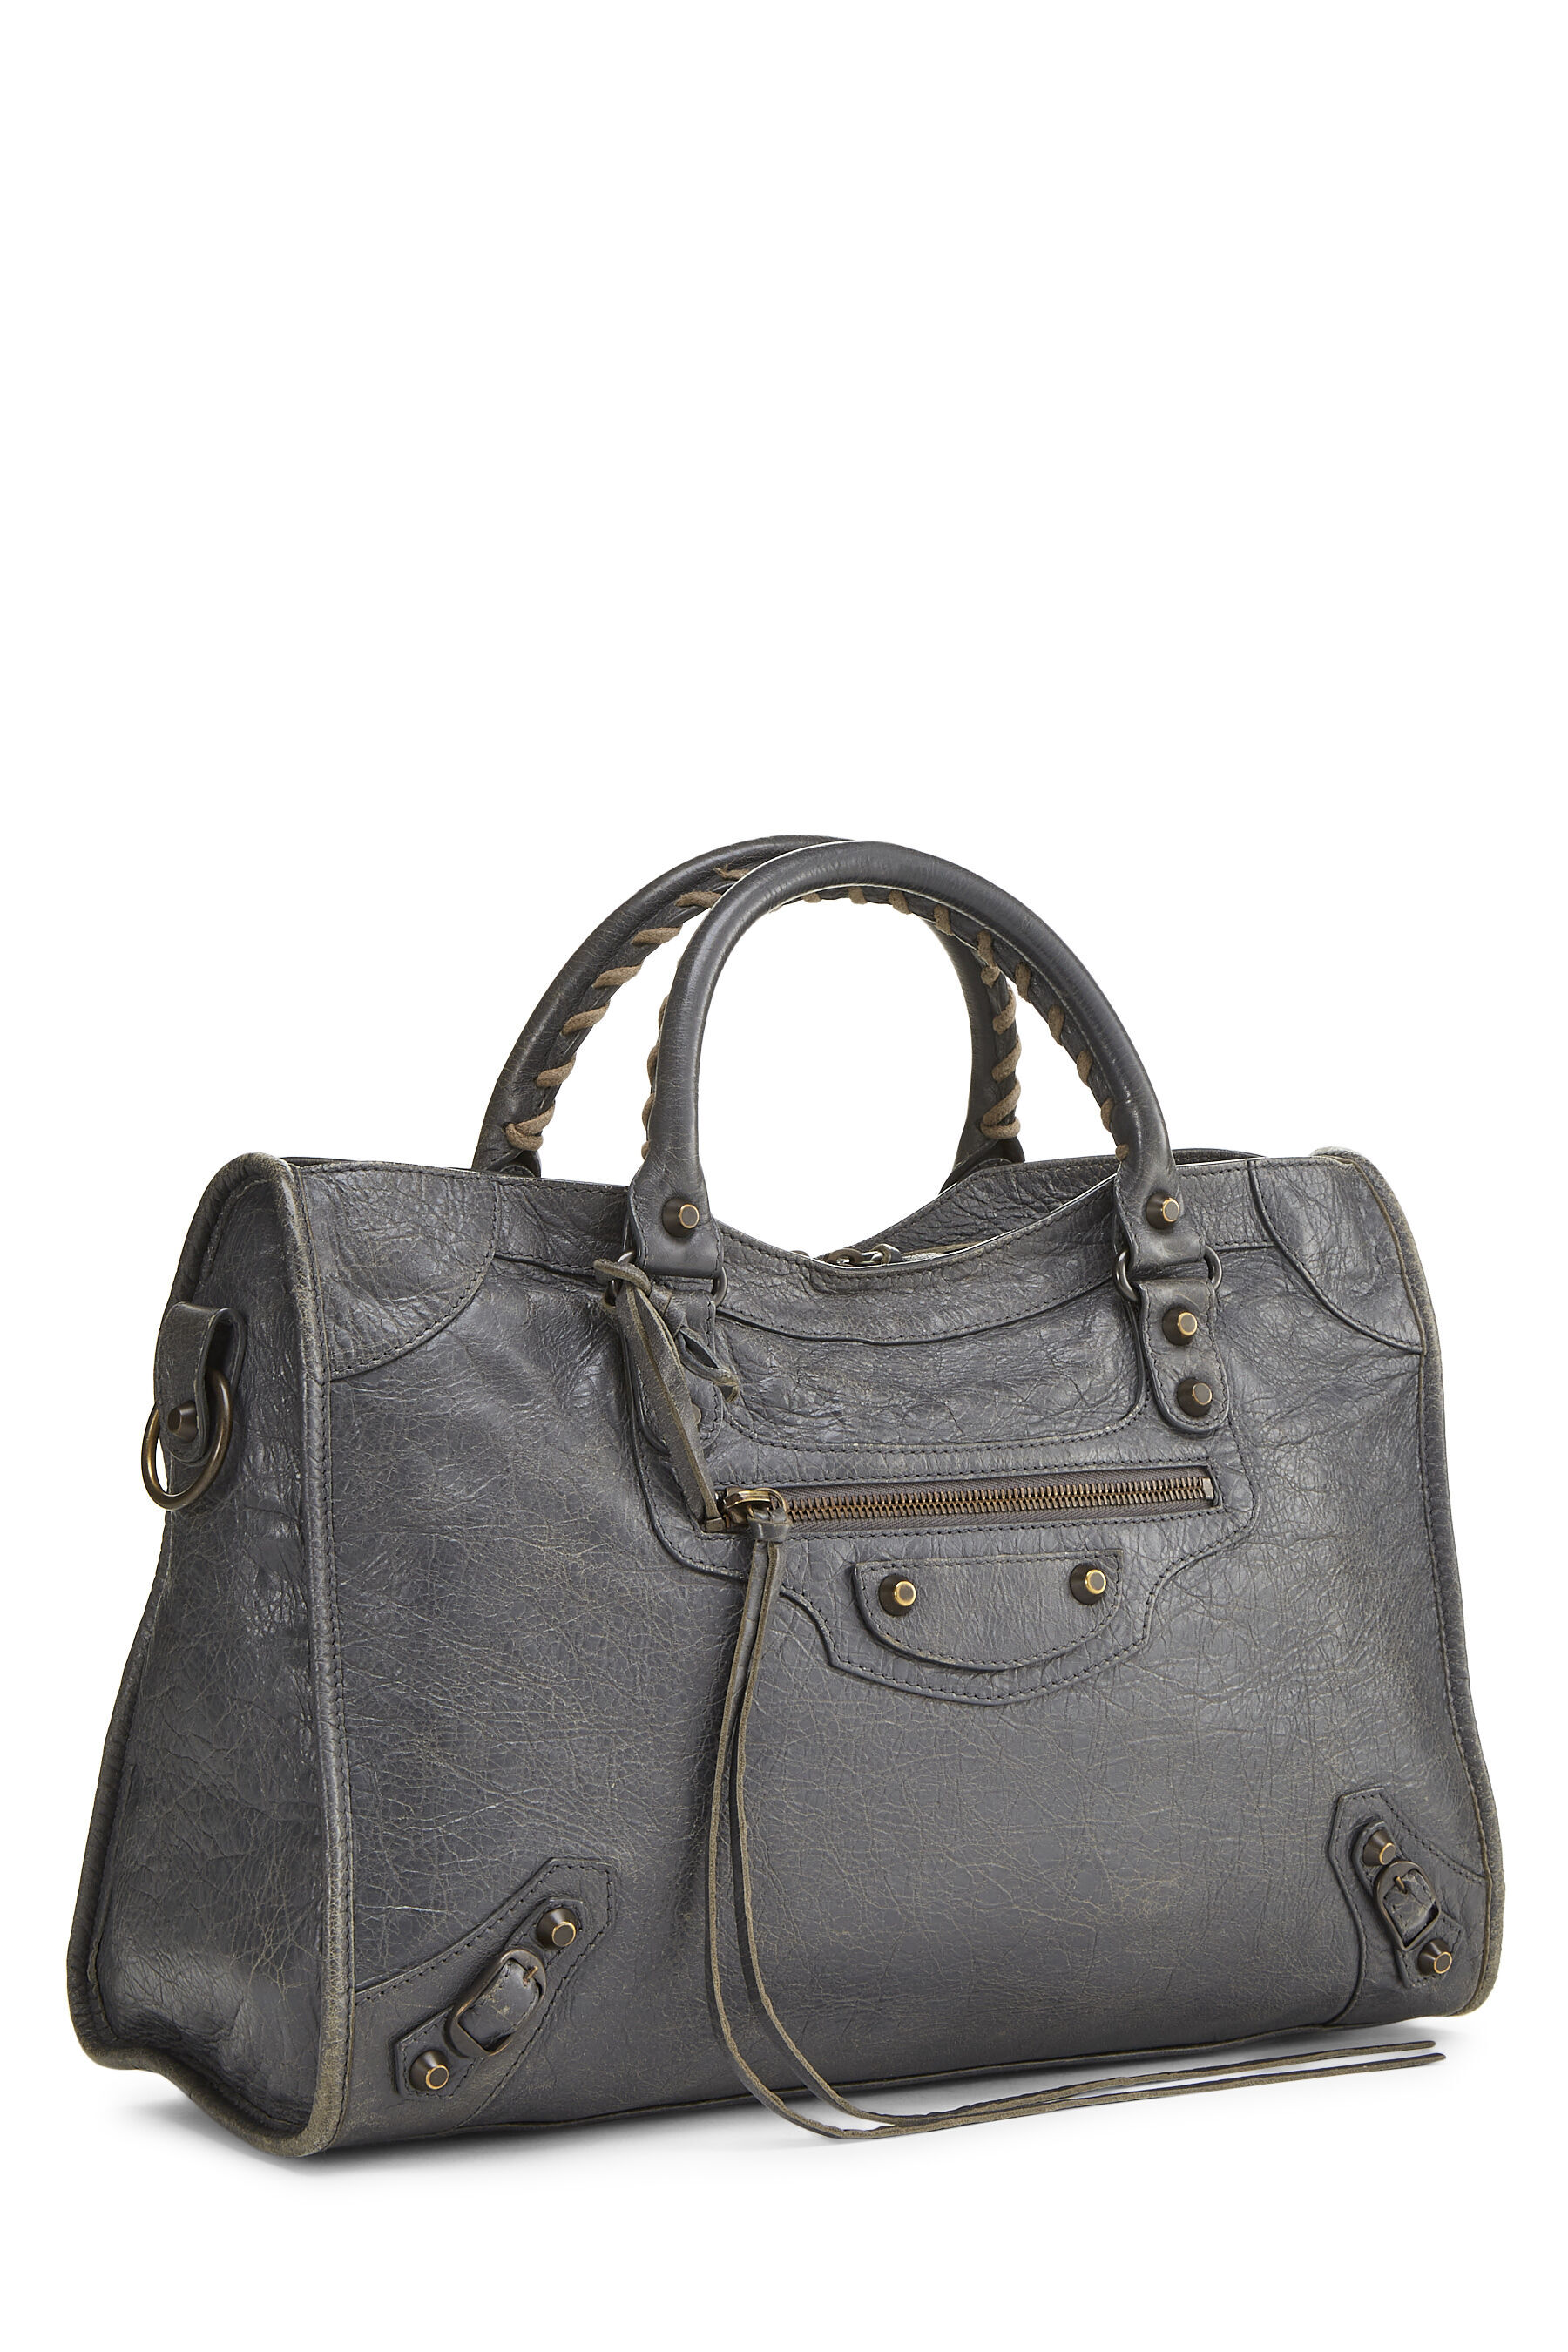 BALENCIAGA City Medium Bag in Black Leather  COCOON